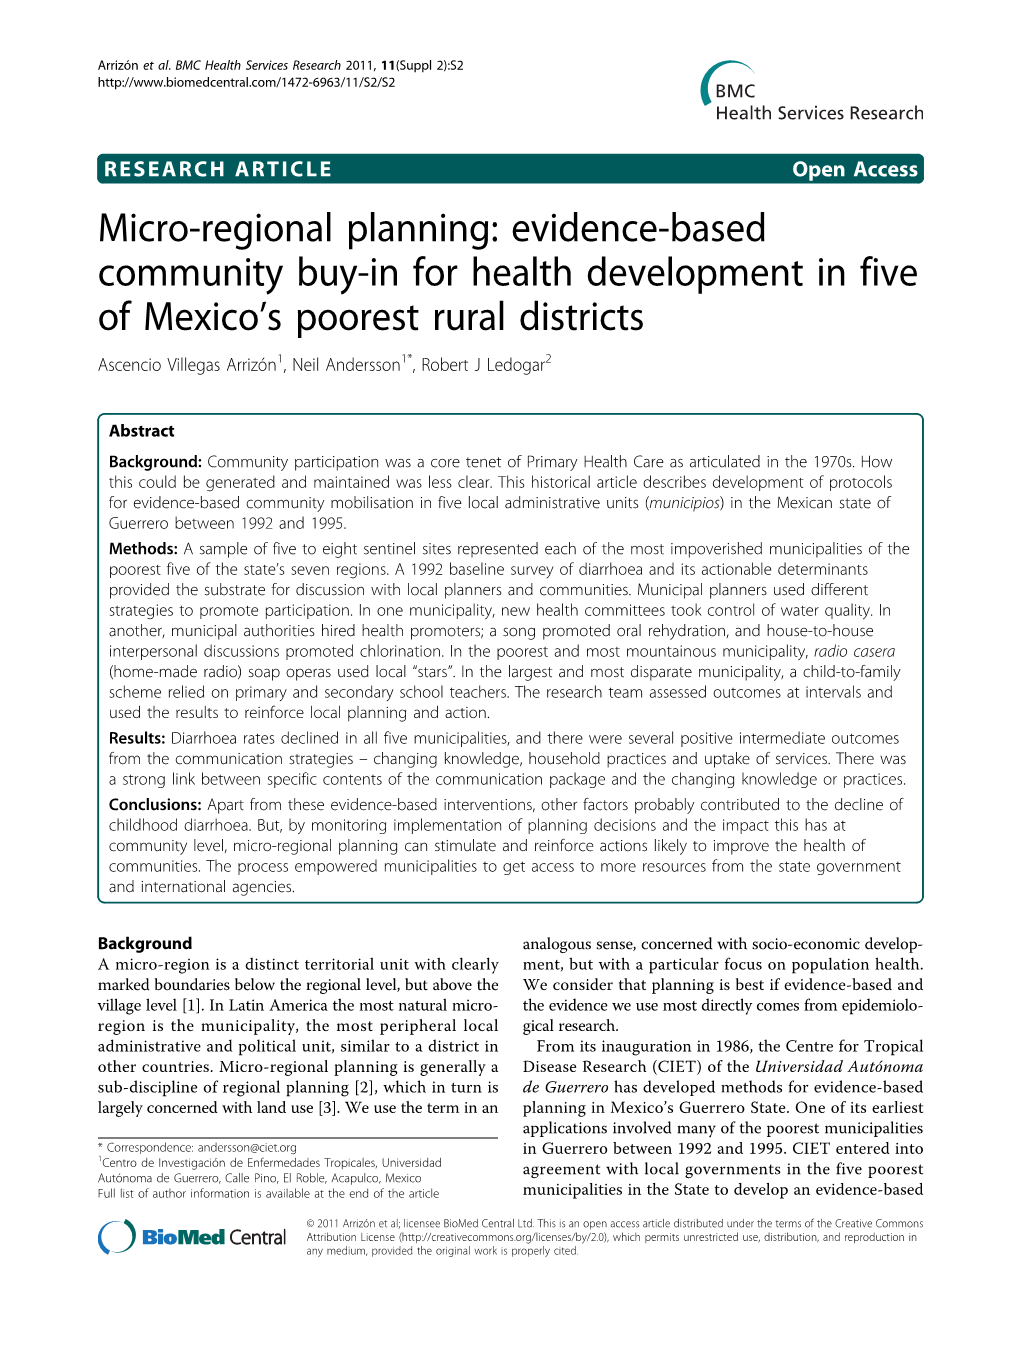 Micro-Regional Planning